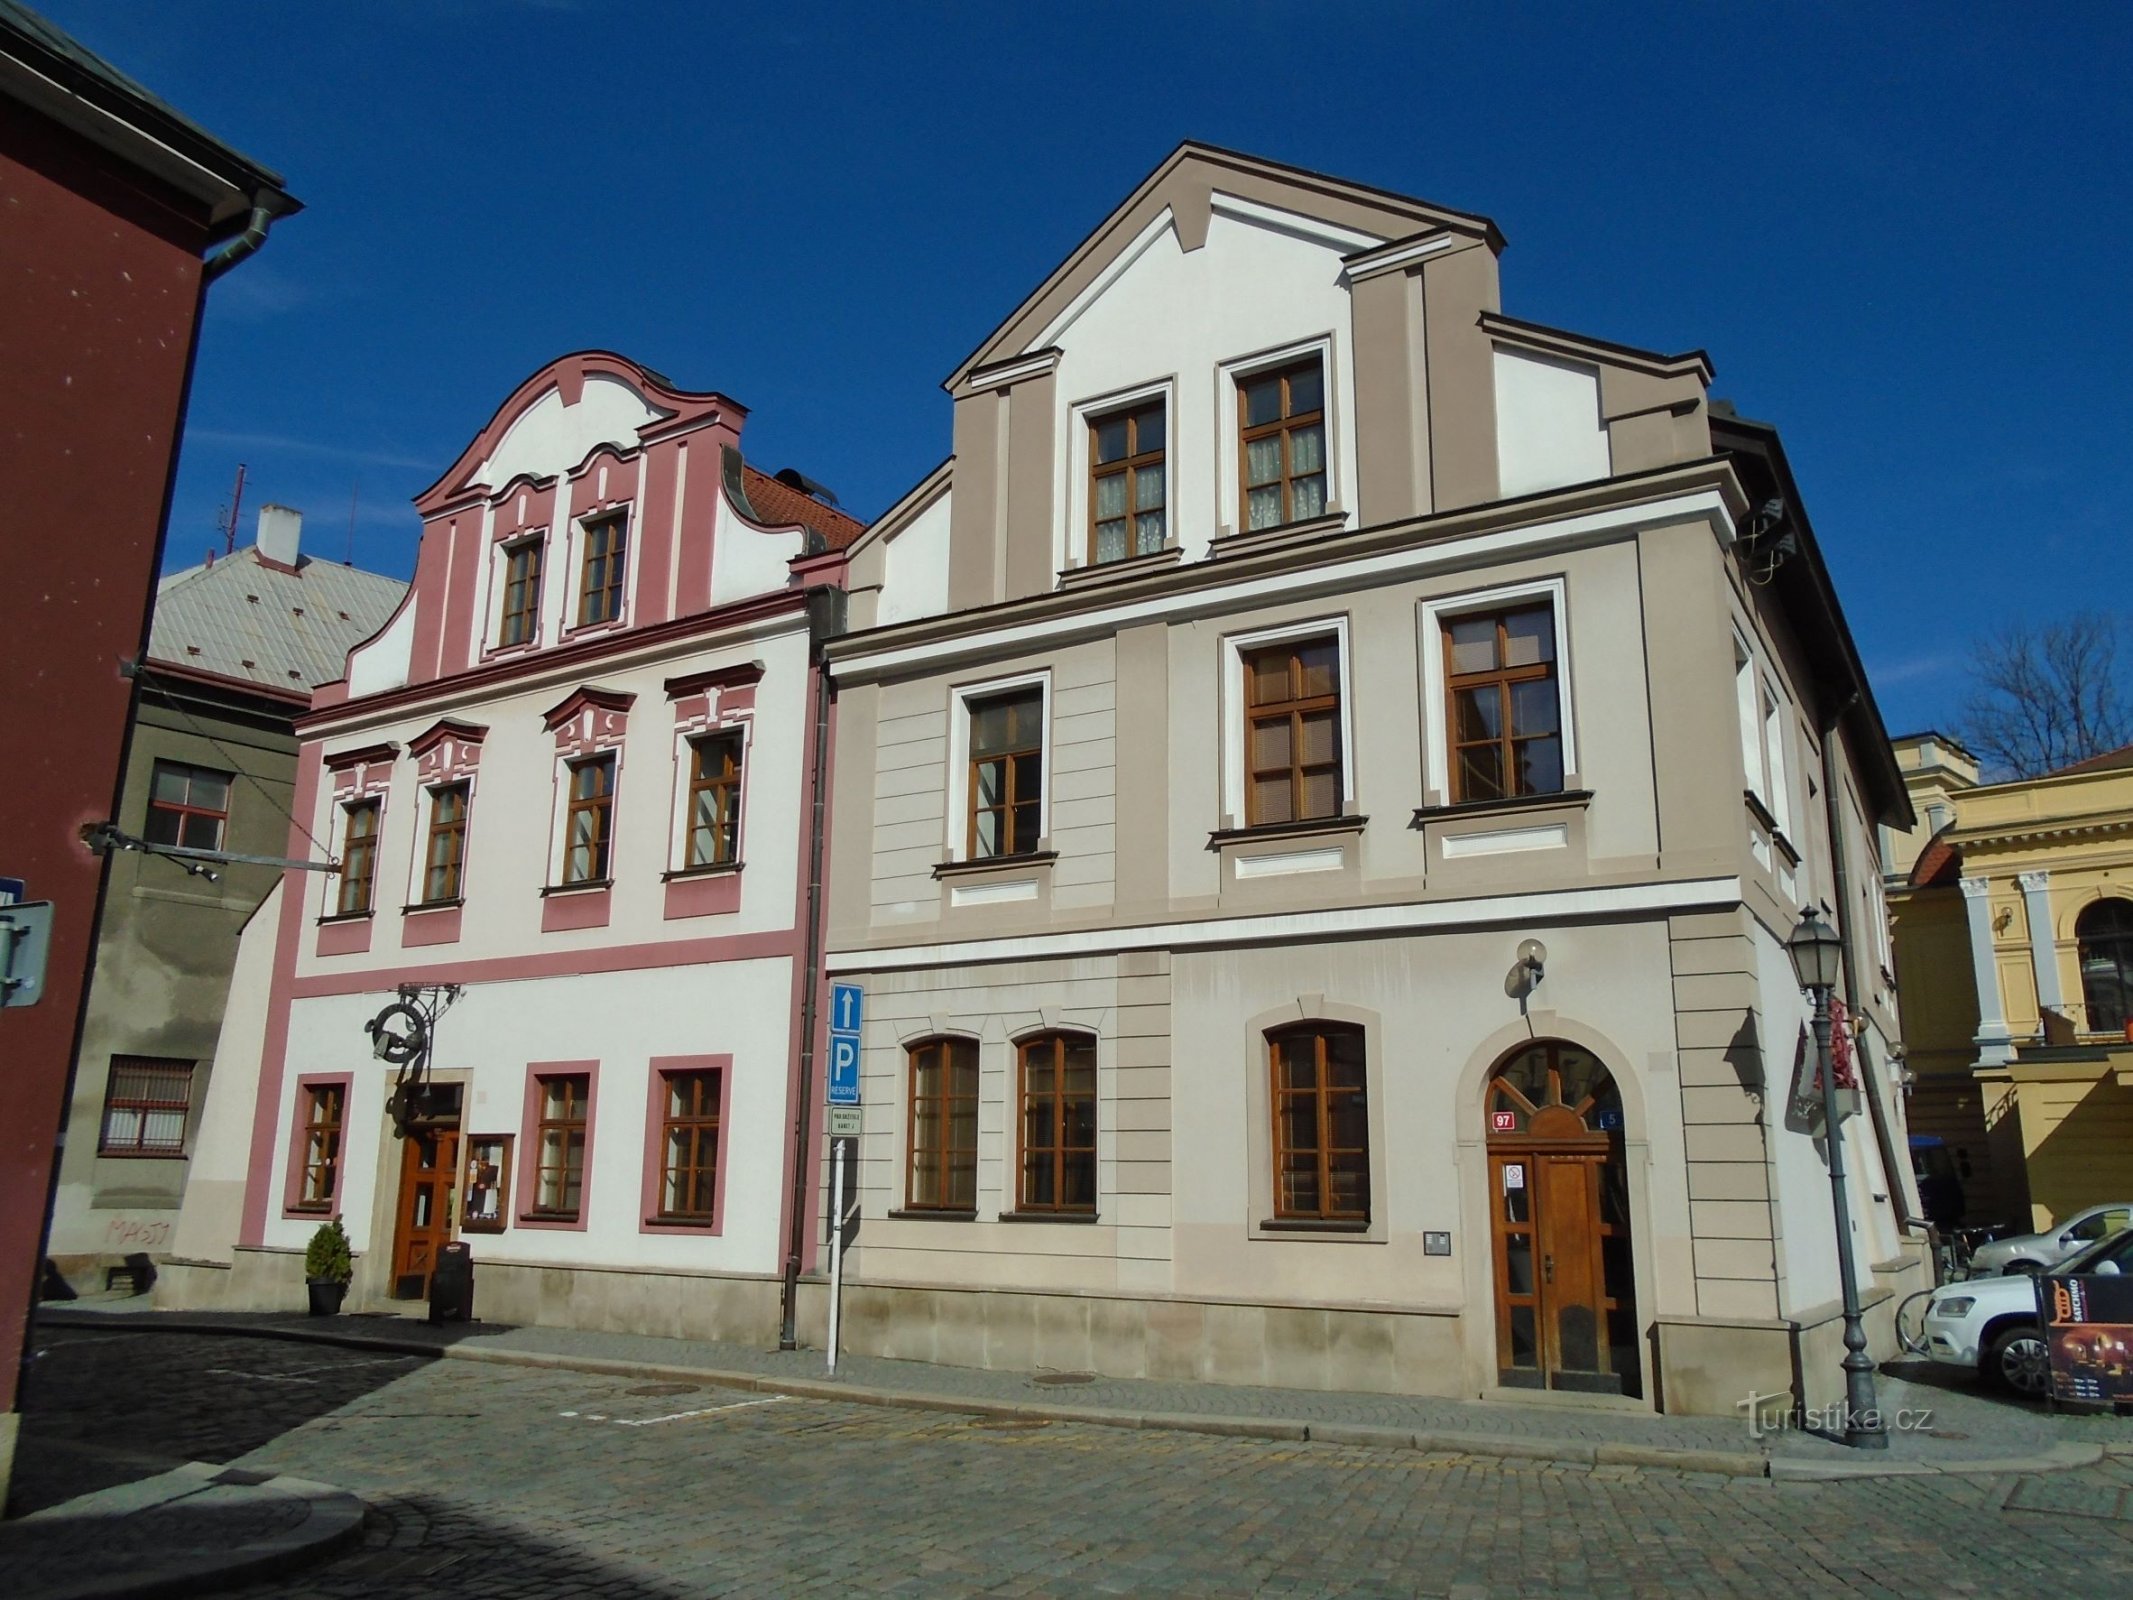 Lang nr. 96-97 (Hradec Králové, 5.4.2018. august XNUMX)